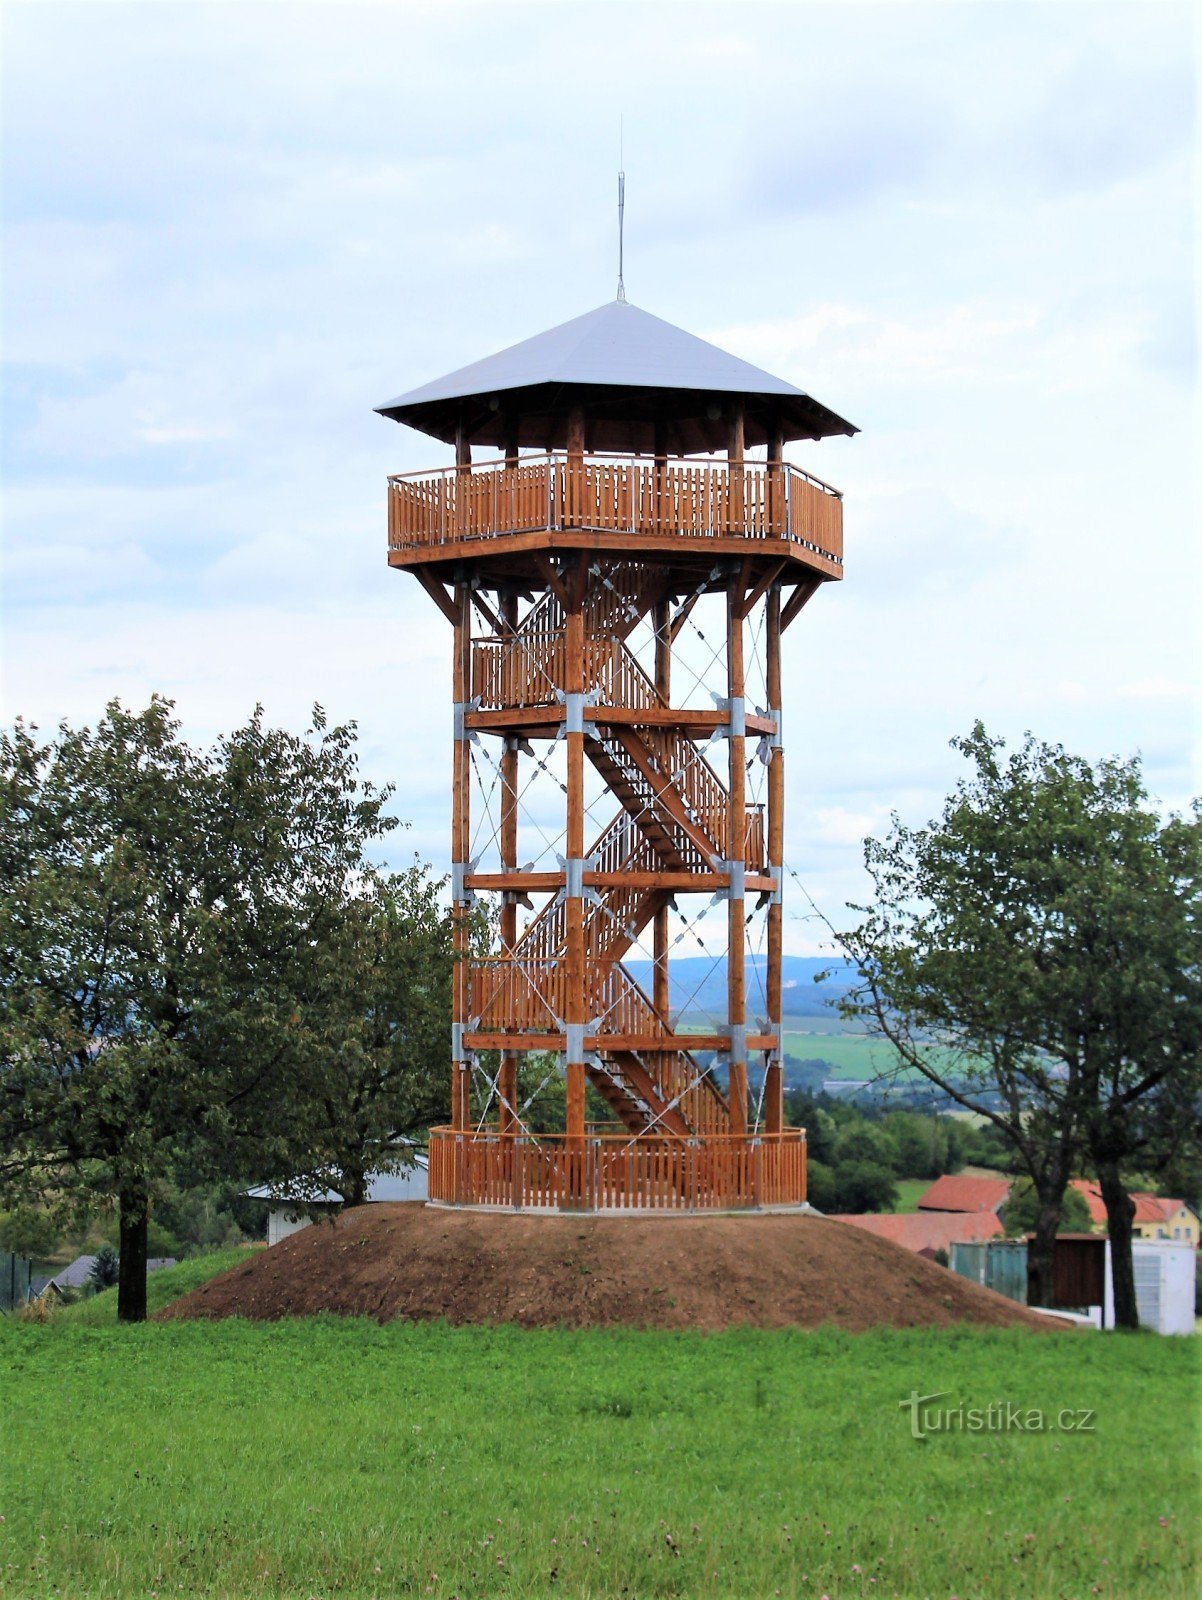 Žernovník の村の上にある展望台